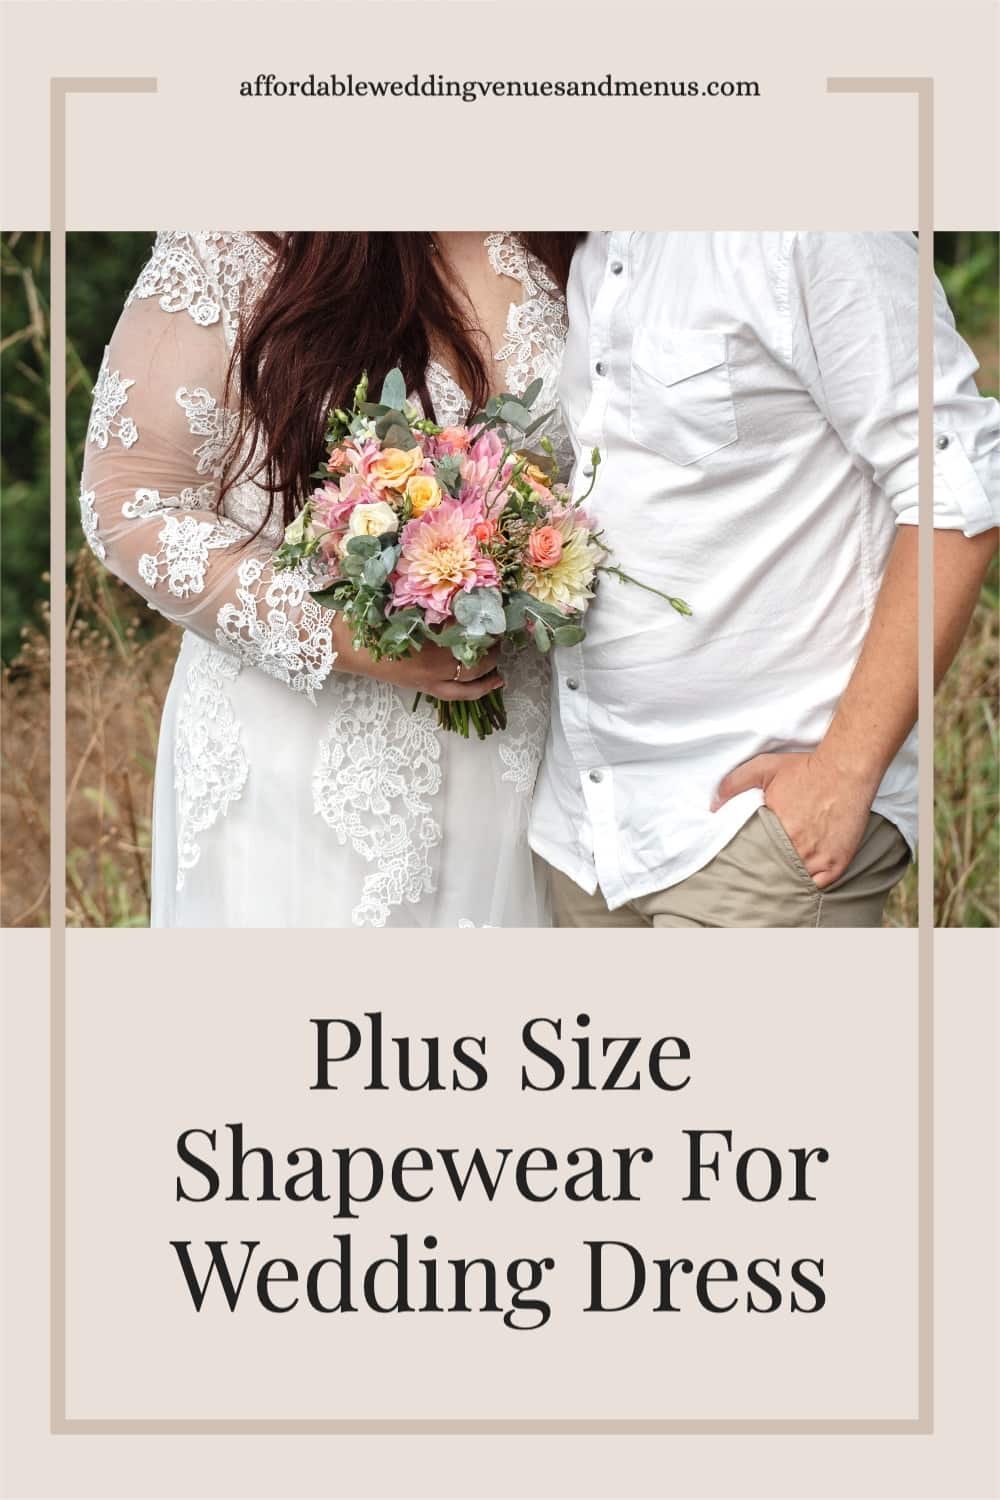 snorkel Morgen resultat Best Plus Size Bridal Shapewear For Wedding Dress Styles — Affordable  Wedding Venues & Menus